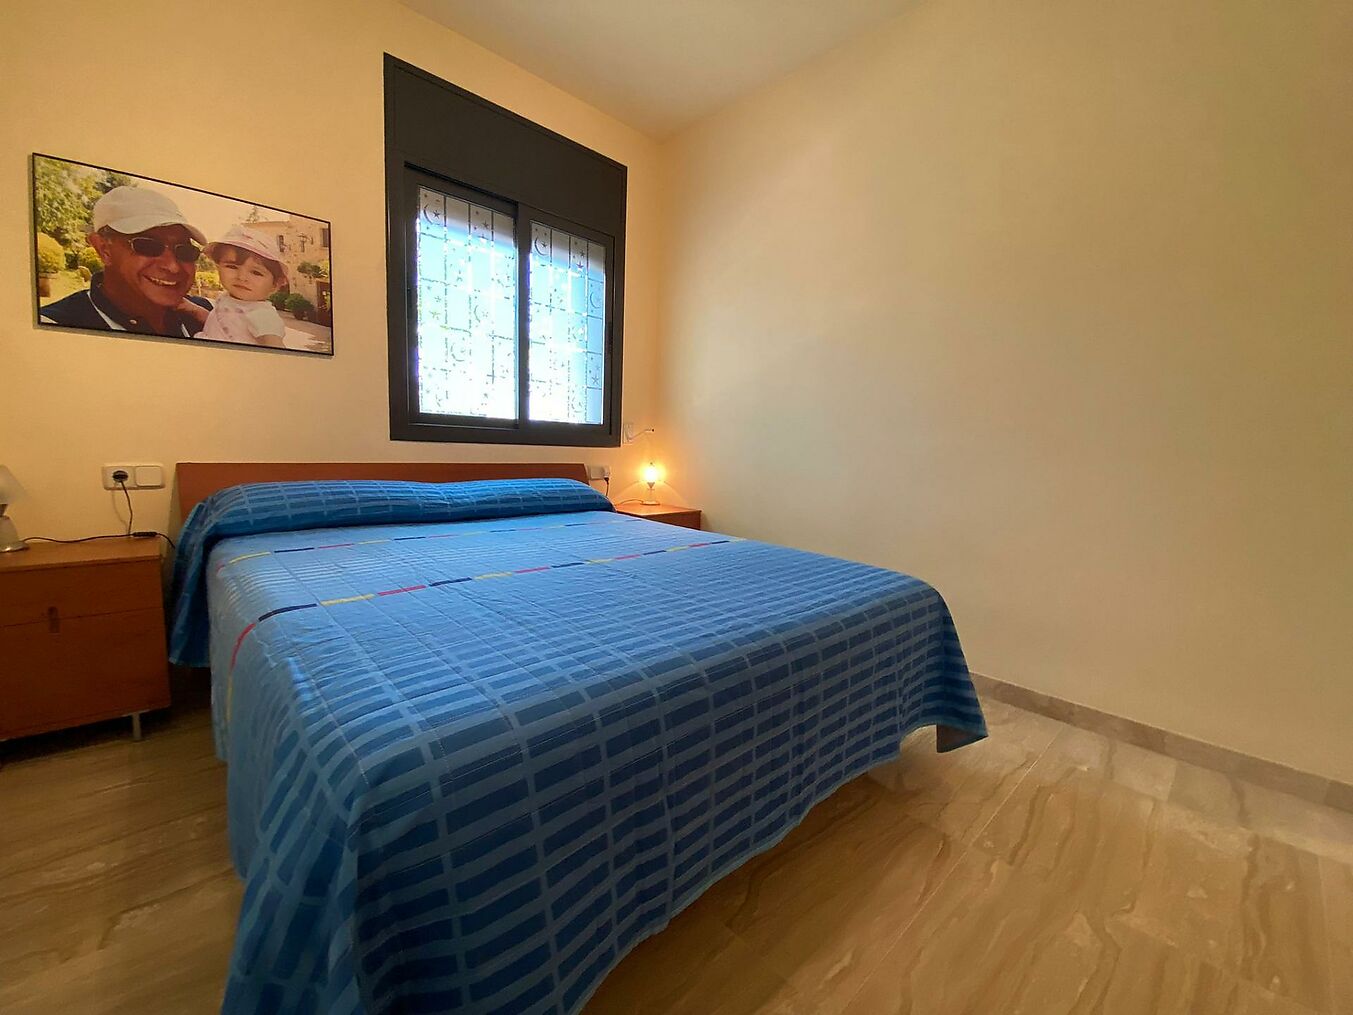 2 bedroom apartment in the port area of Platja d'Aro